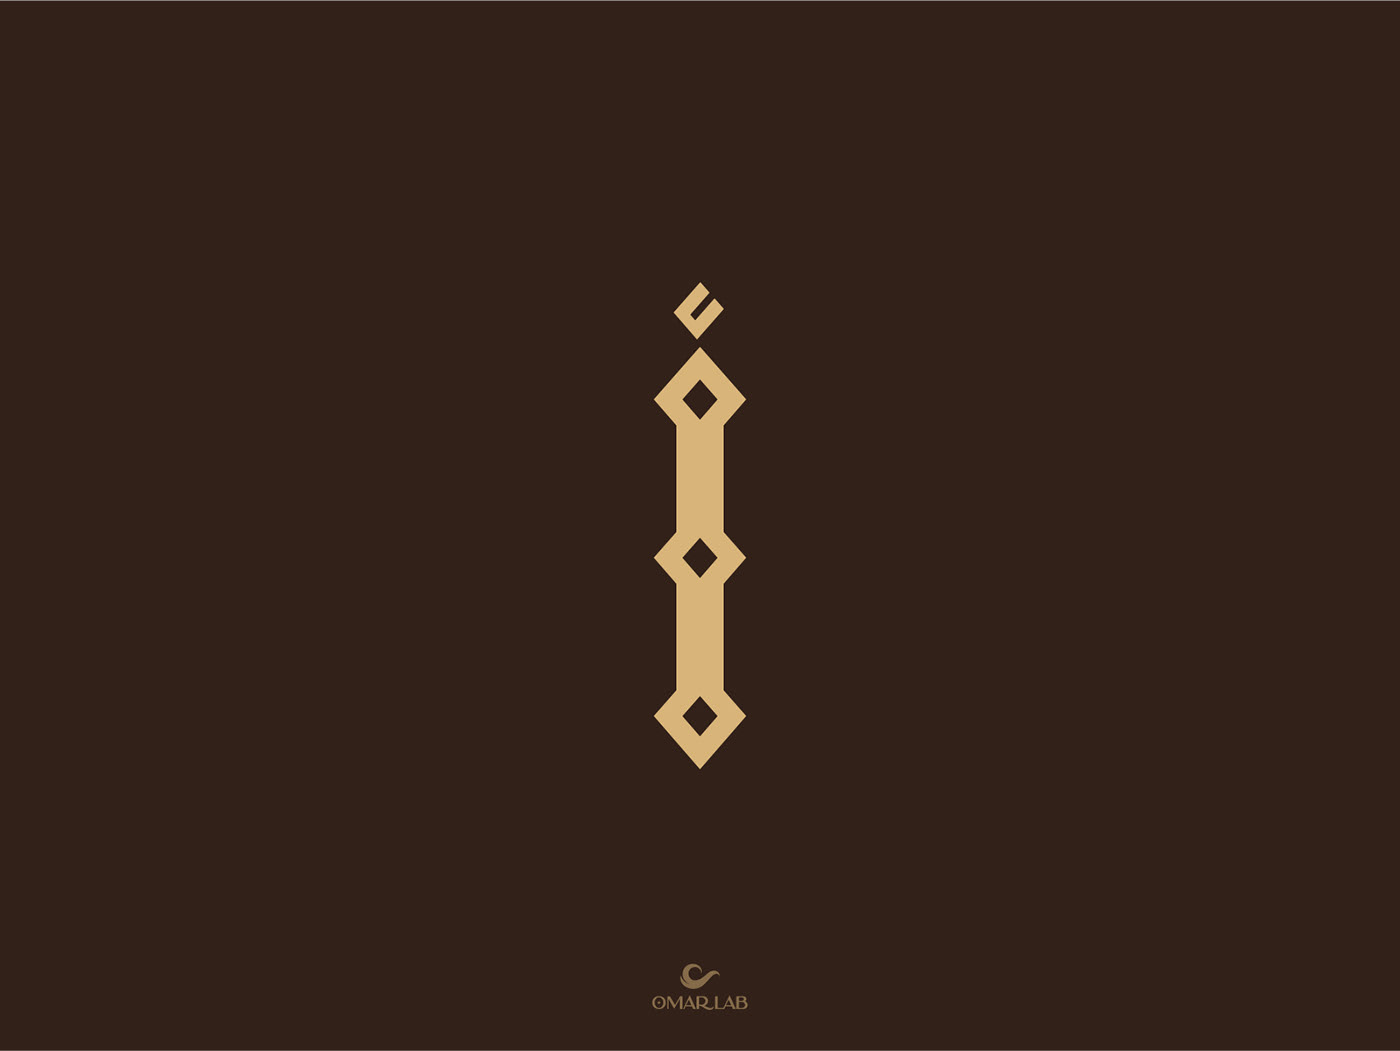 42 days arabic Calligraphy   Handlettering islamic lettering logos Logotype type typography  